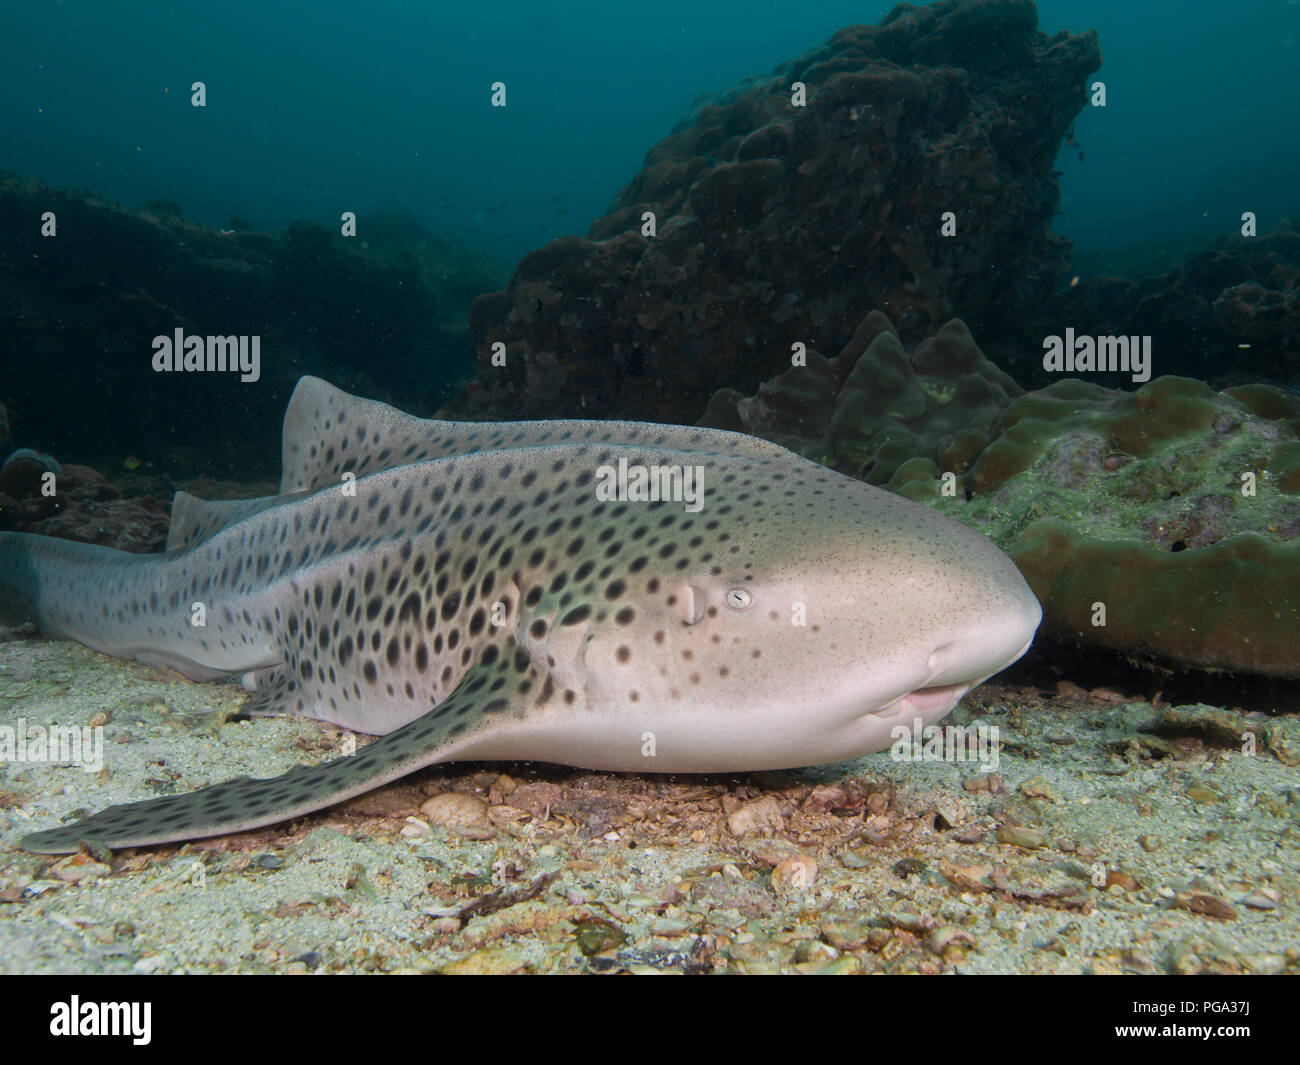 Leopard Shark resting on the sandy bottom Stock Photo